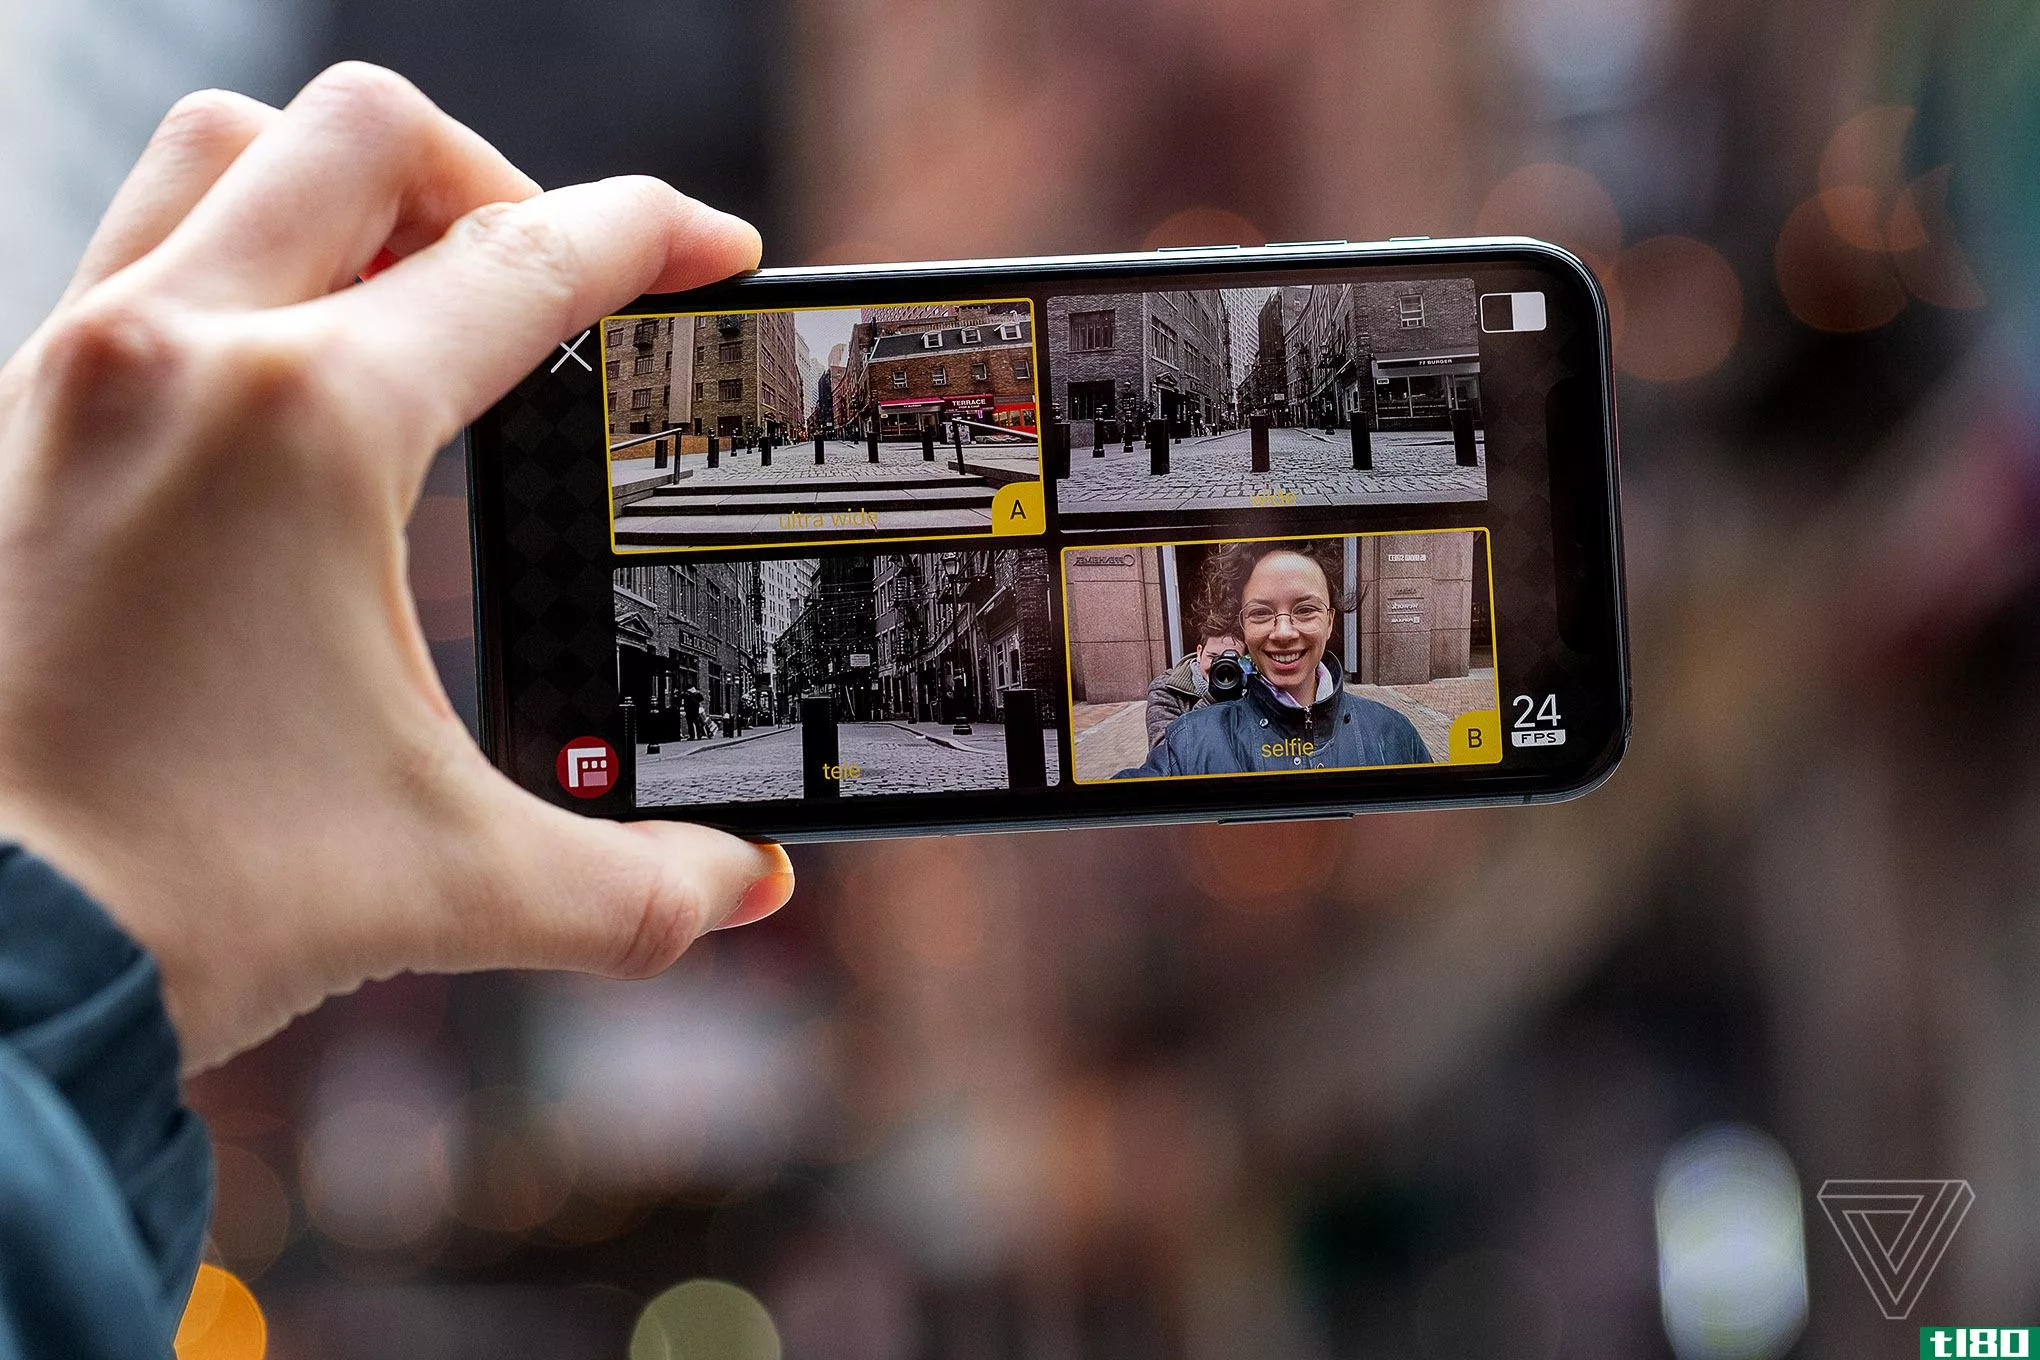 filmic doubletake允许您同时从两个iphone相机进行录制